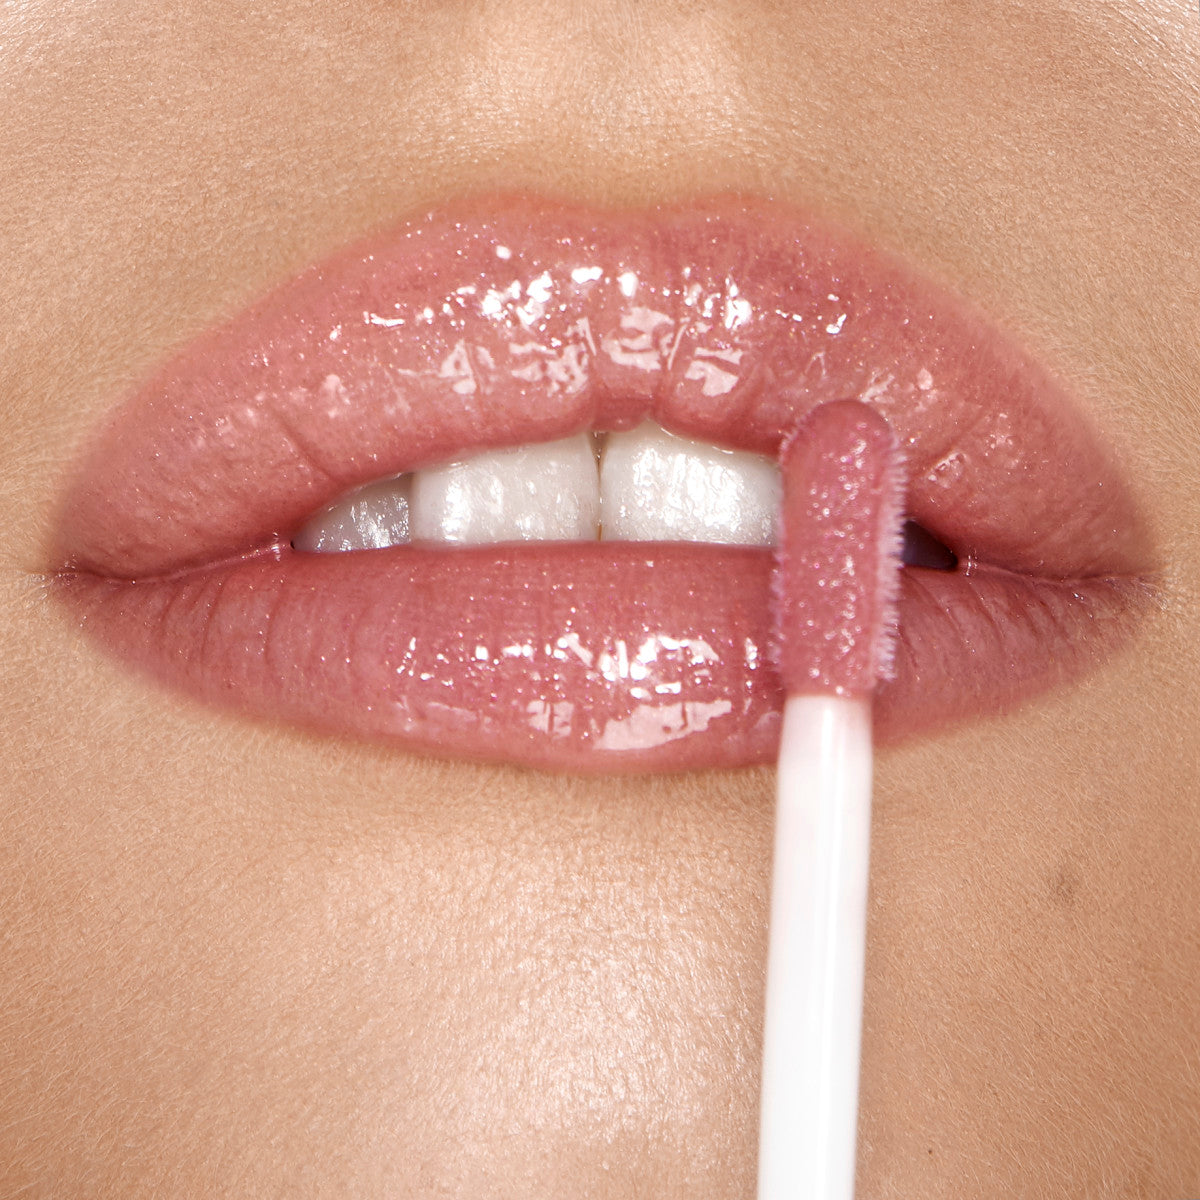 Charlotte Tilbury Jewel Lips Diamond Lip Gloss | Pillow Talk